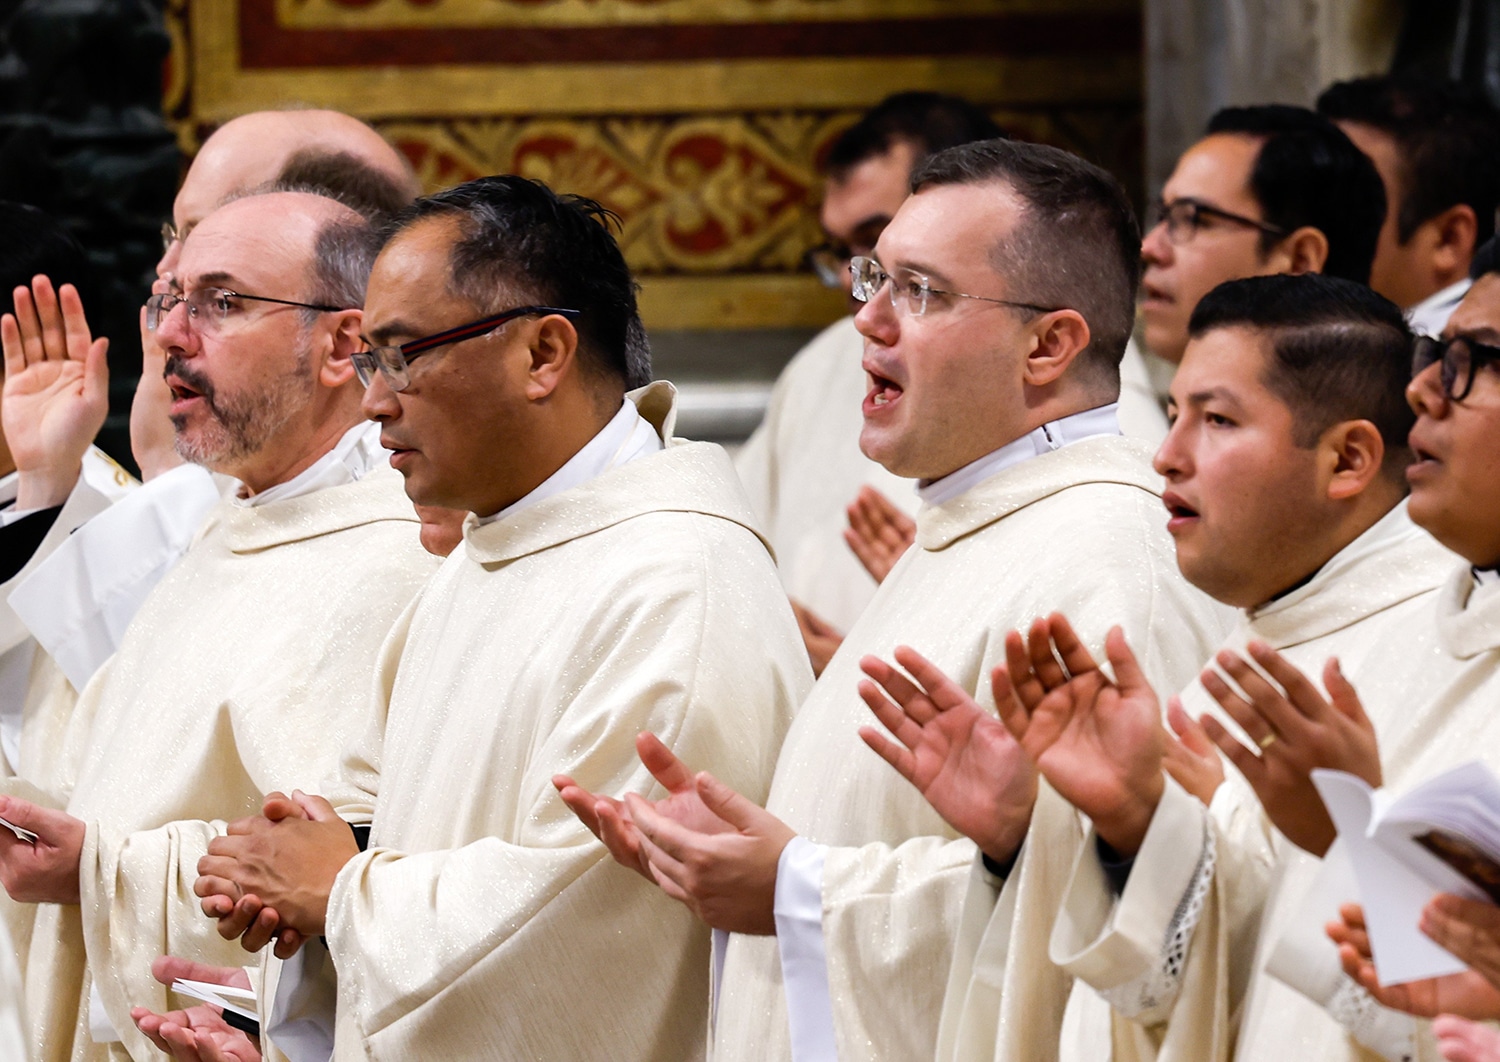 Priests synod